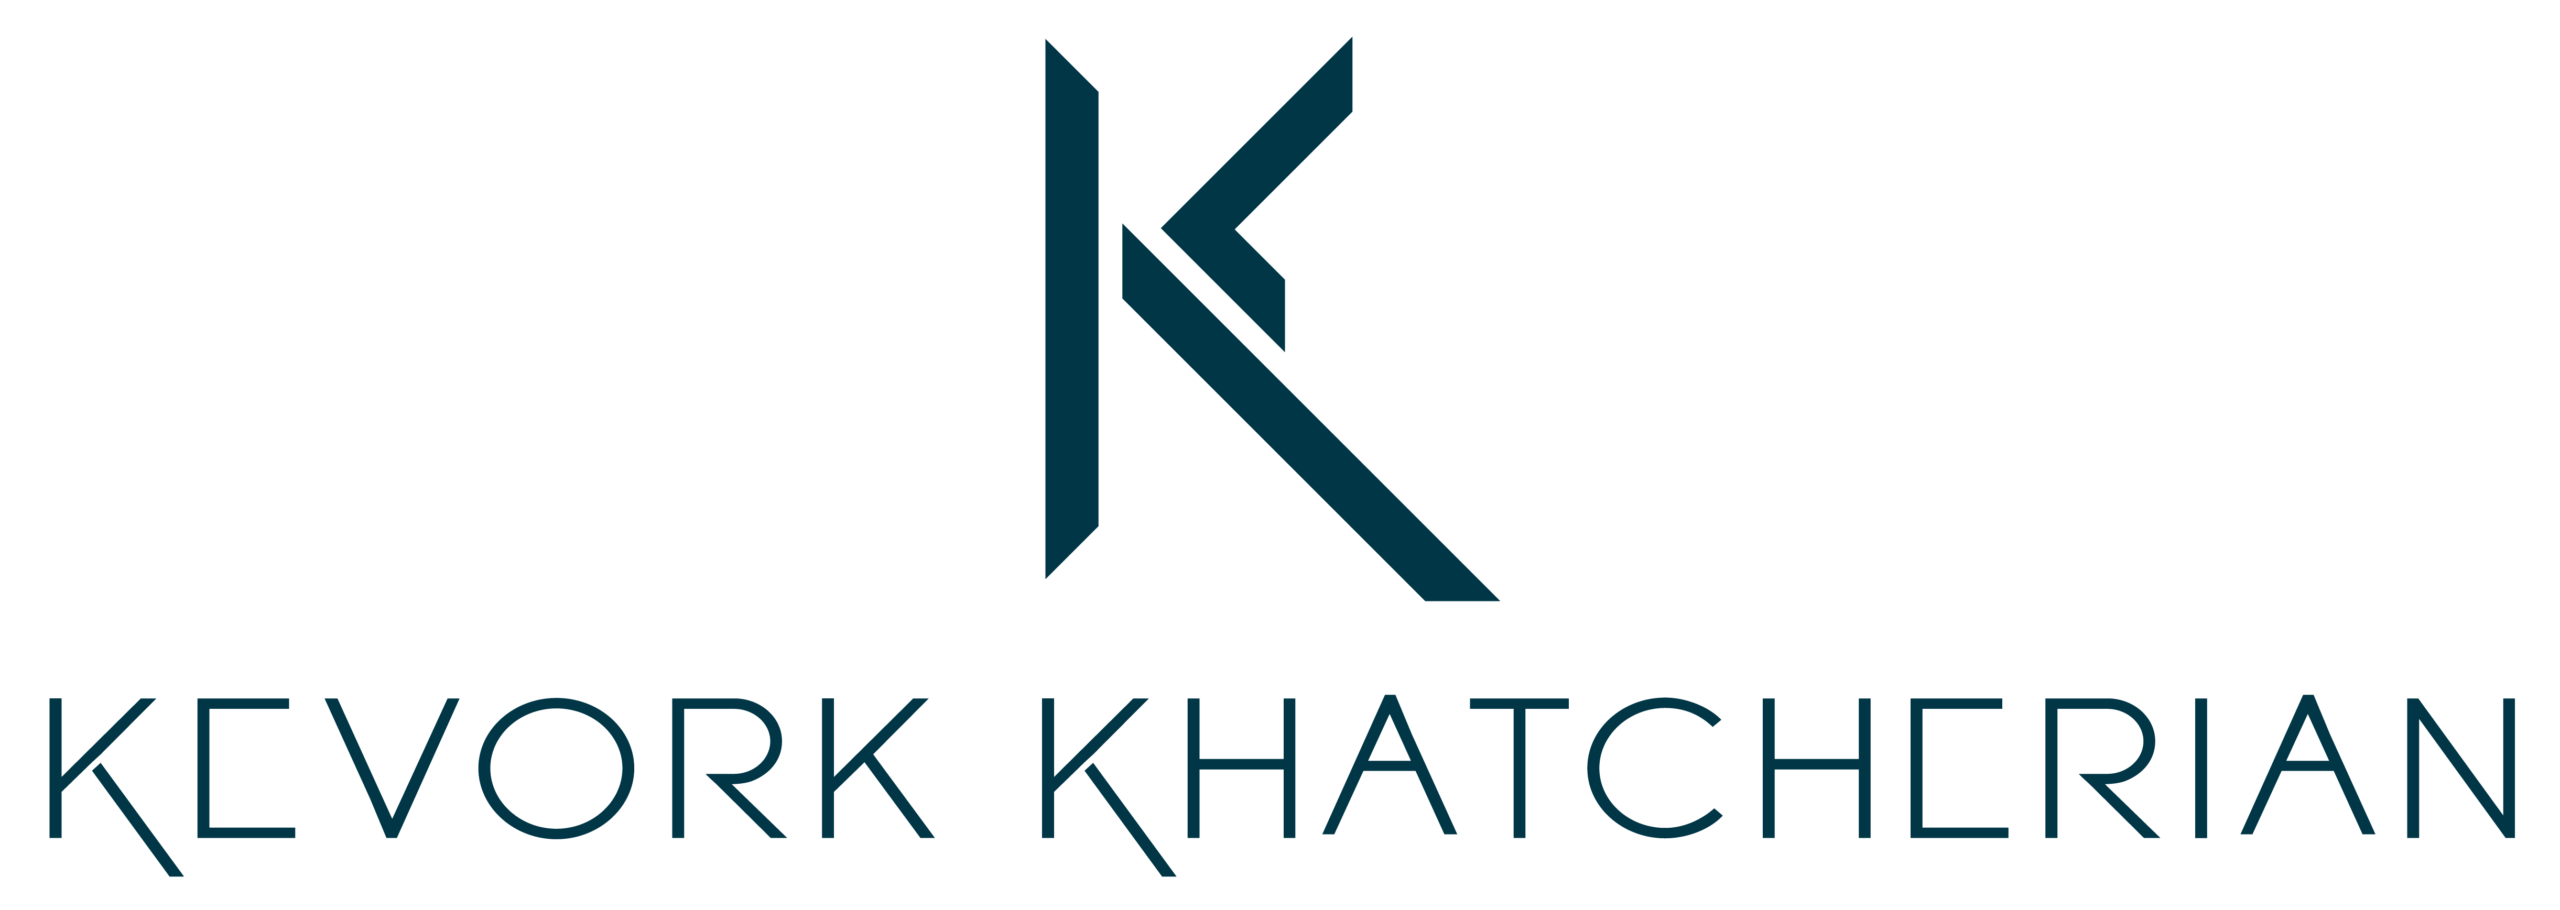 Kevork-Khatcherian-Main-Website-Logo